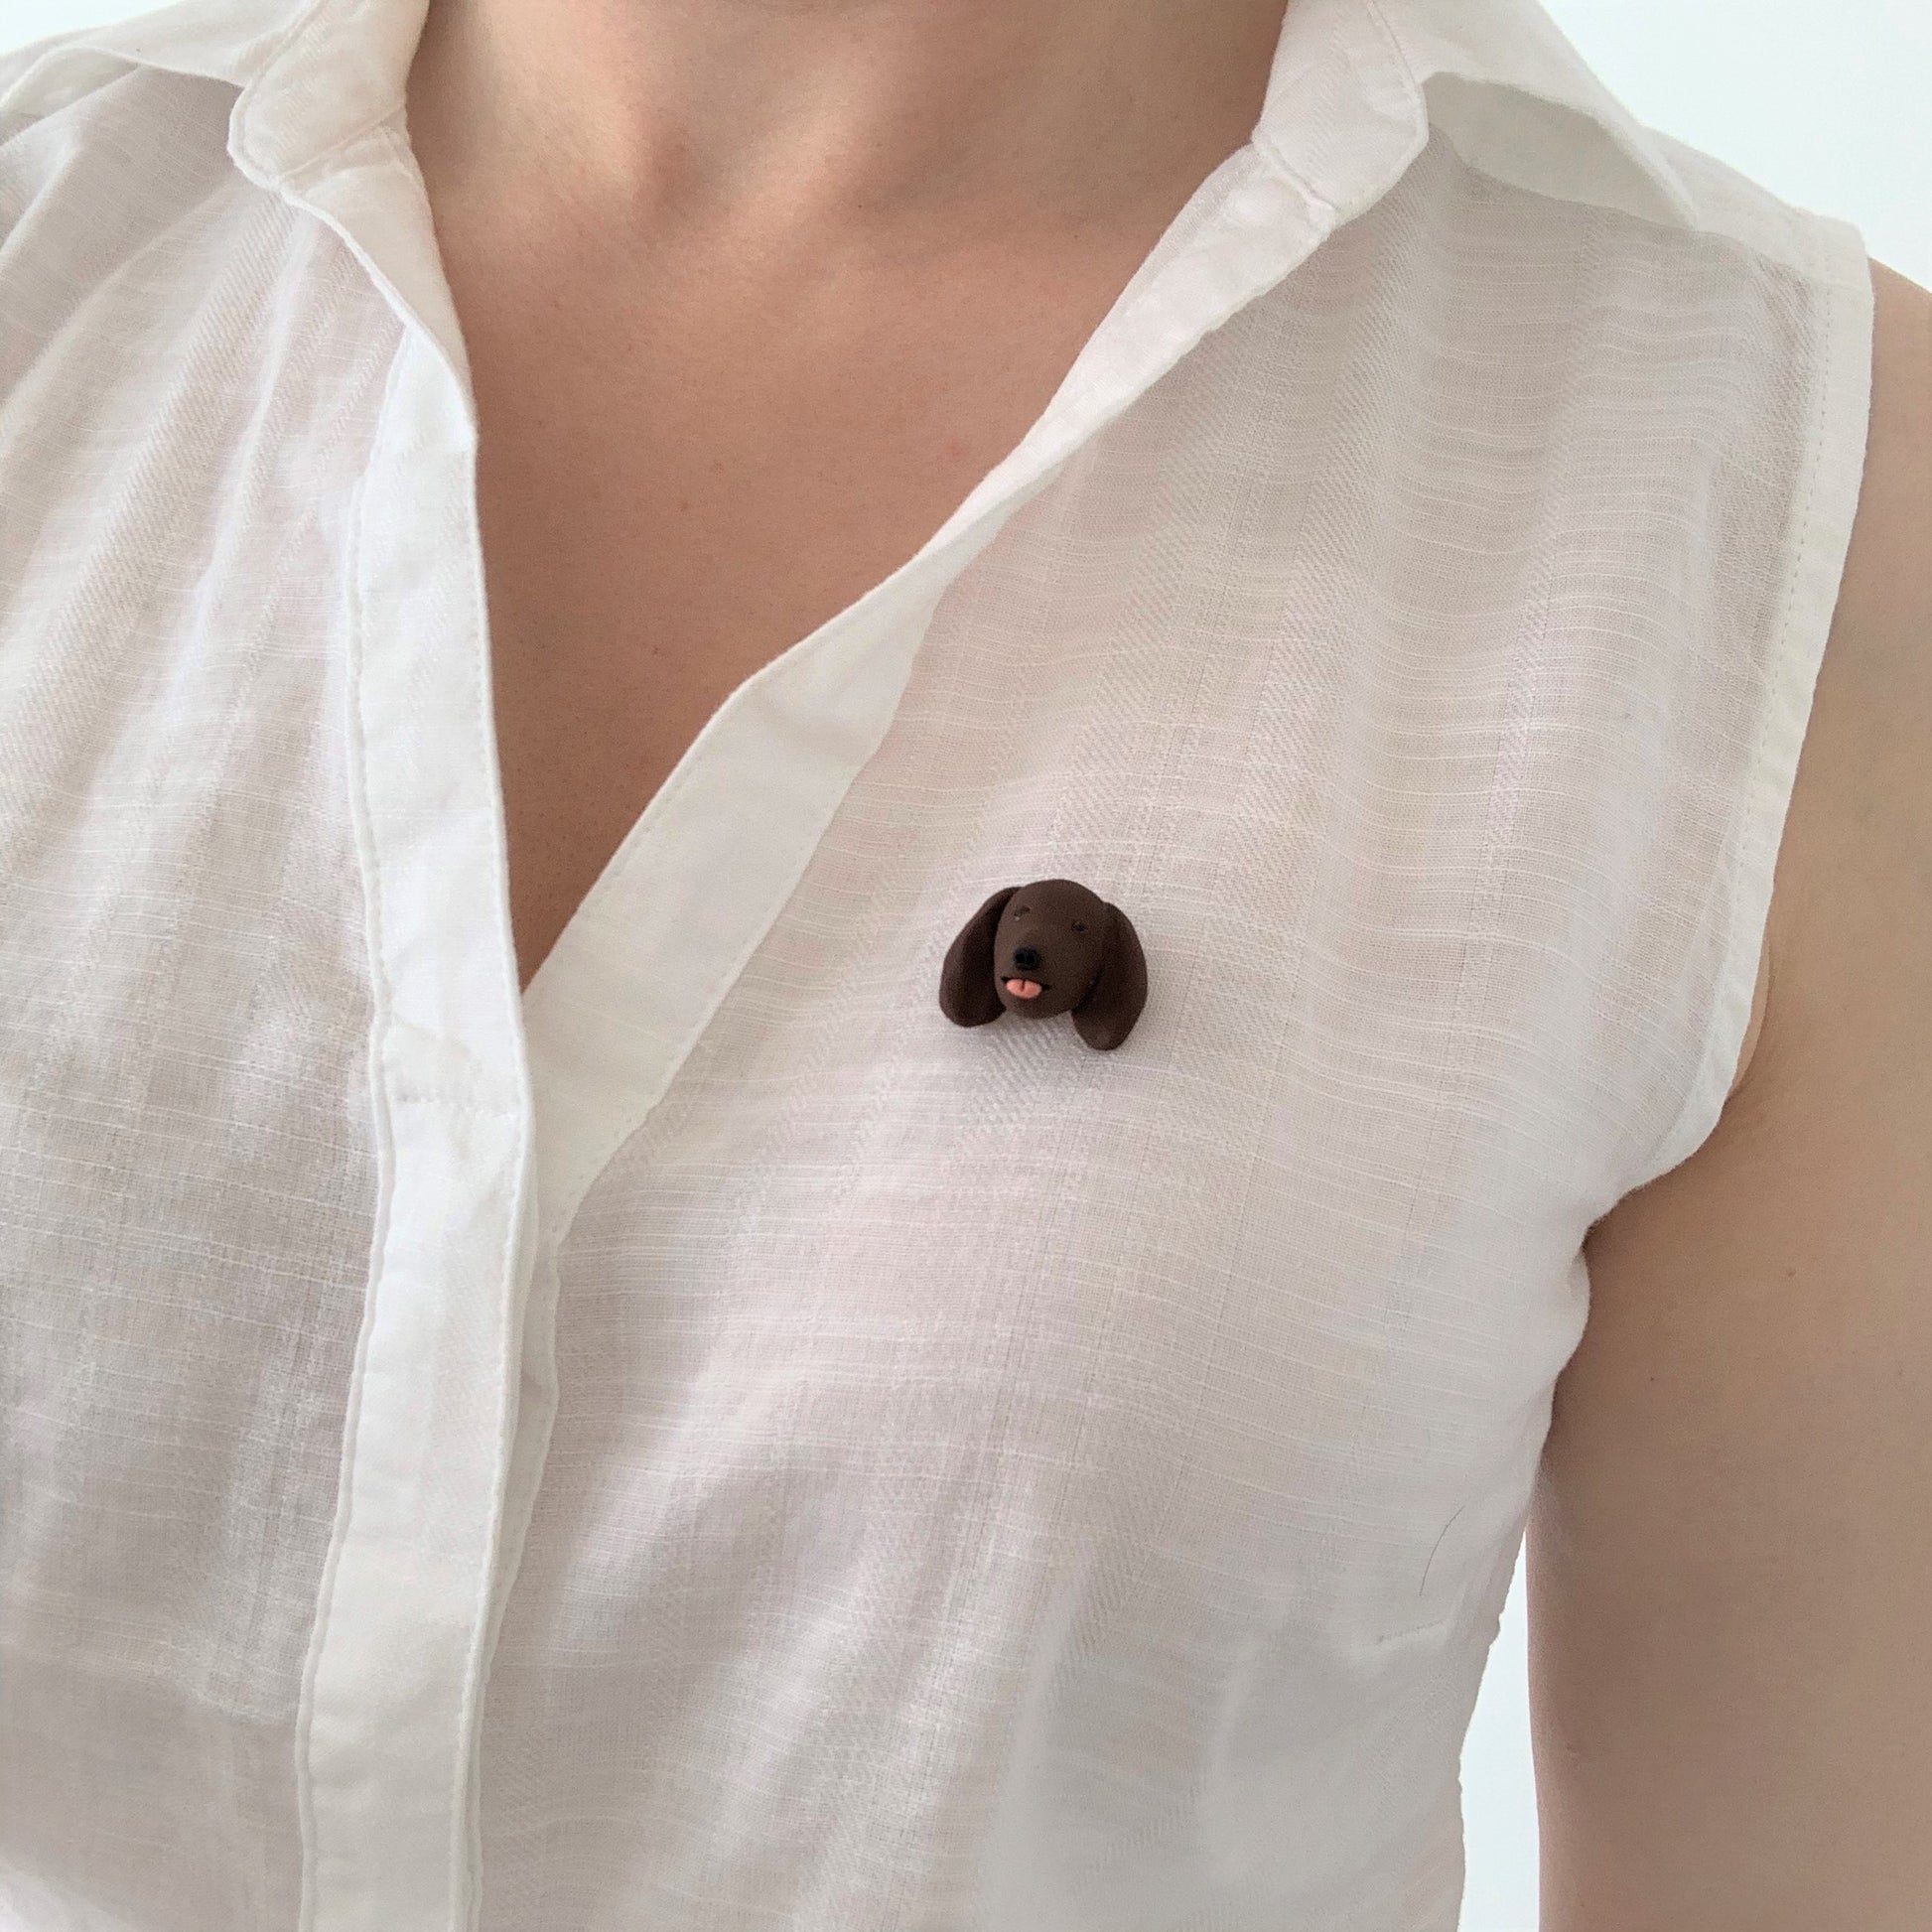 Handmade polymer clay brown dog brooch, shown on white shirt.